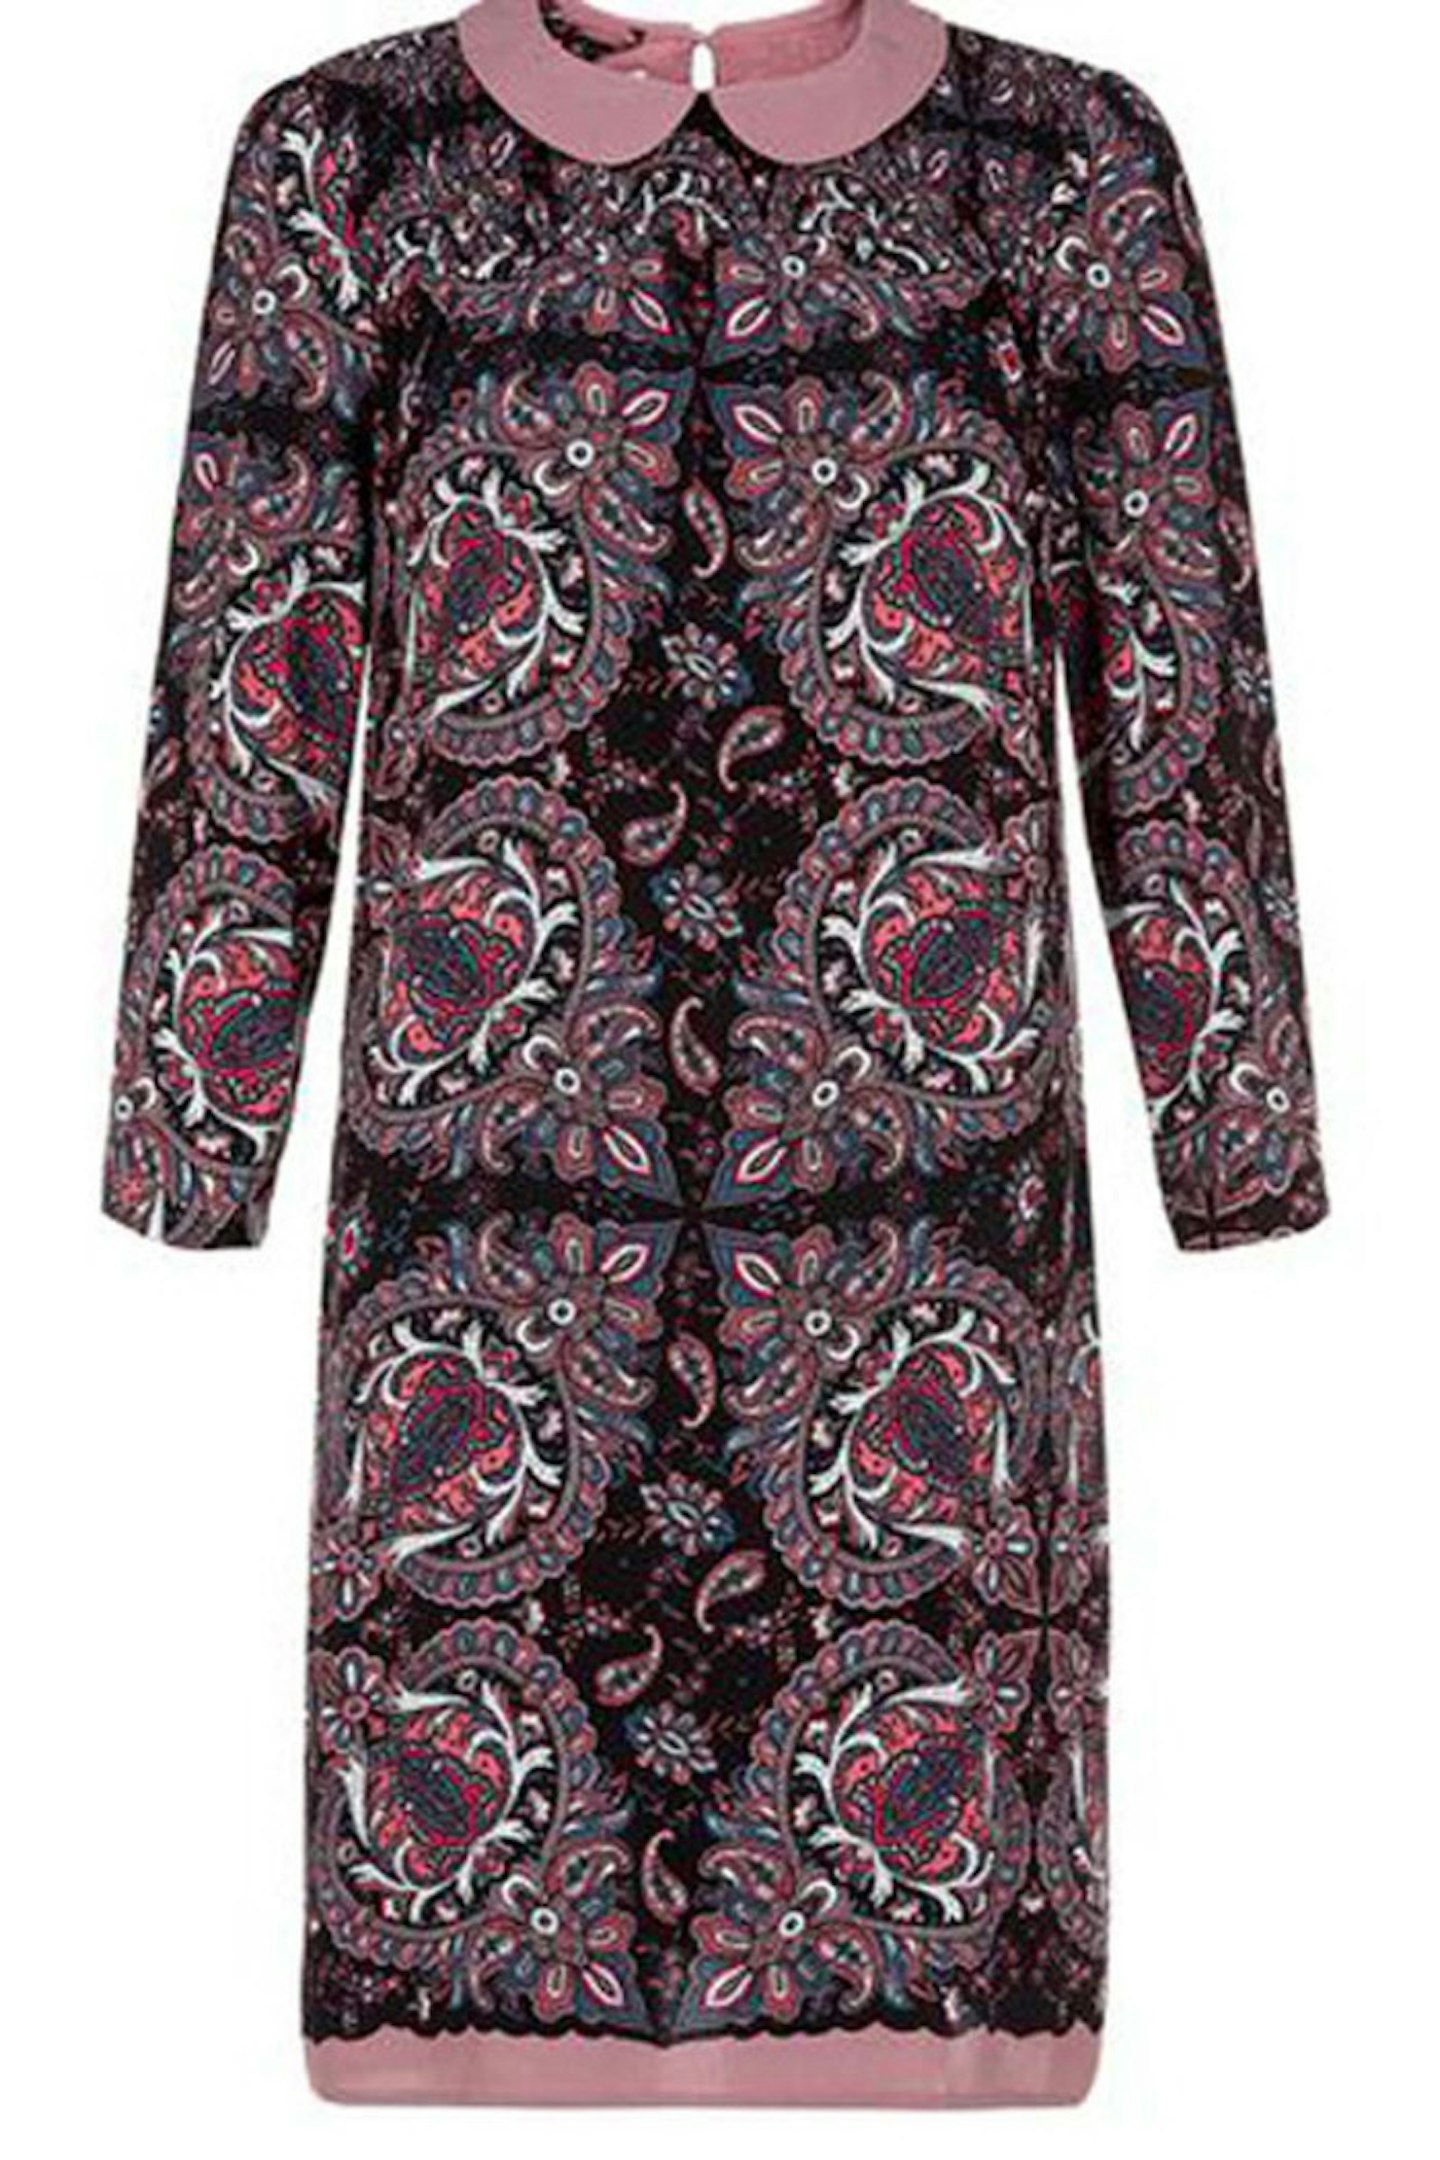 42. Paisley Print Smock Dress, £139, NW3 By Hobbs